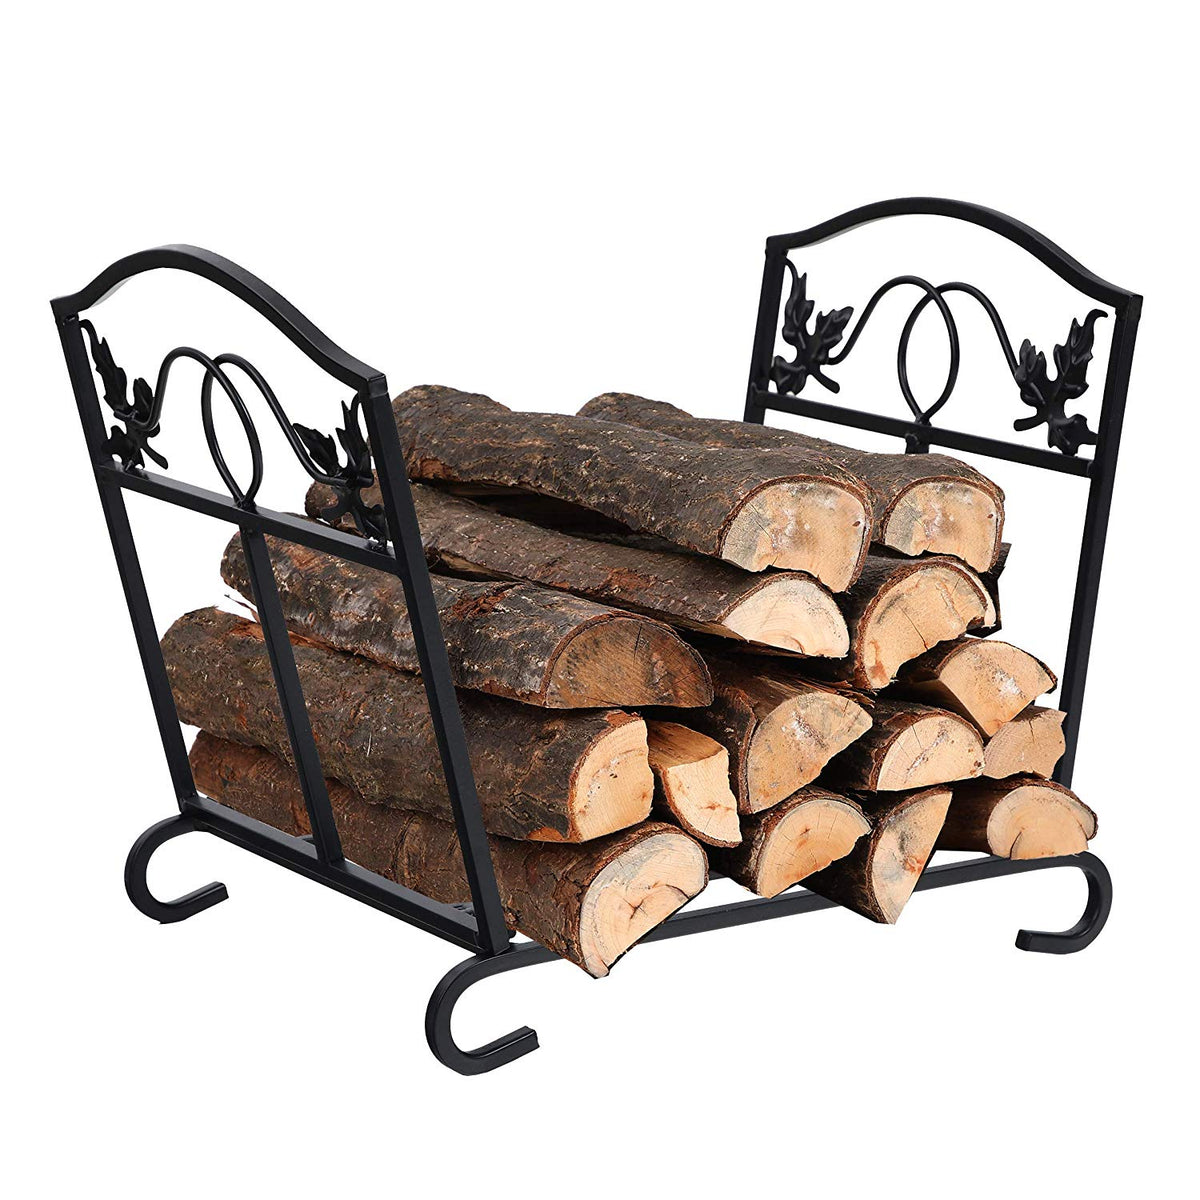 PHI VILLA 17 Inch Foldable Firewood Log Rack Decorative Indoor/Outdoor Steel Wood Storage Log Rack Holder, Black